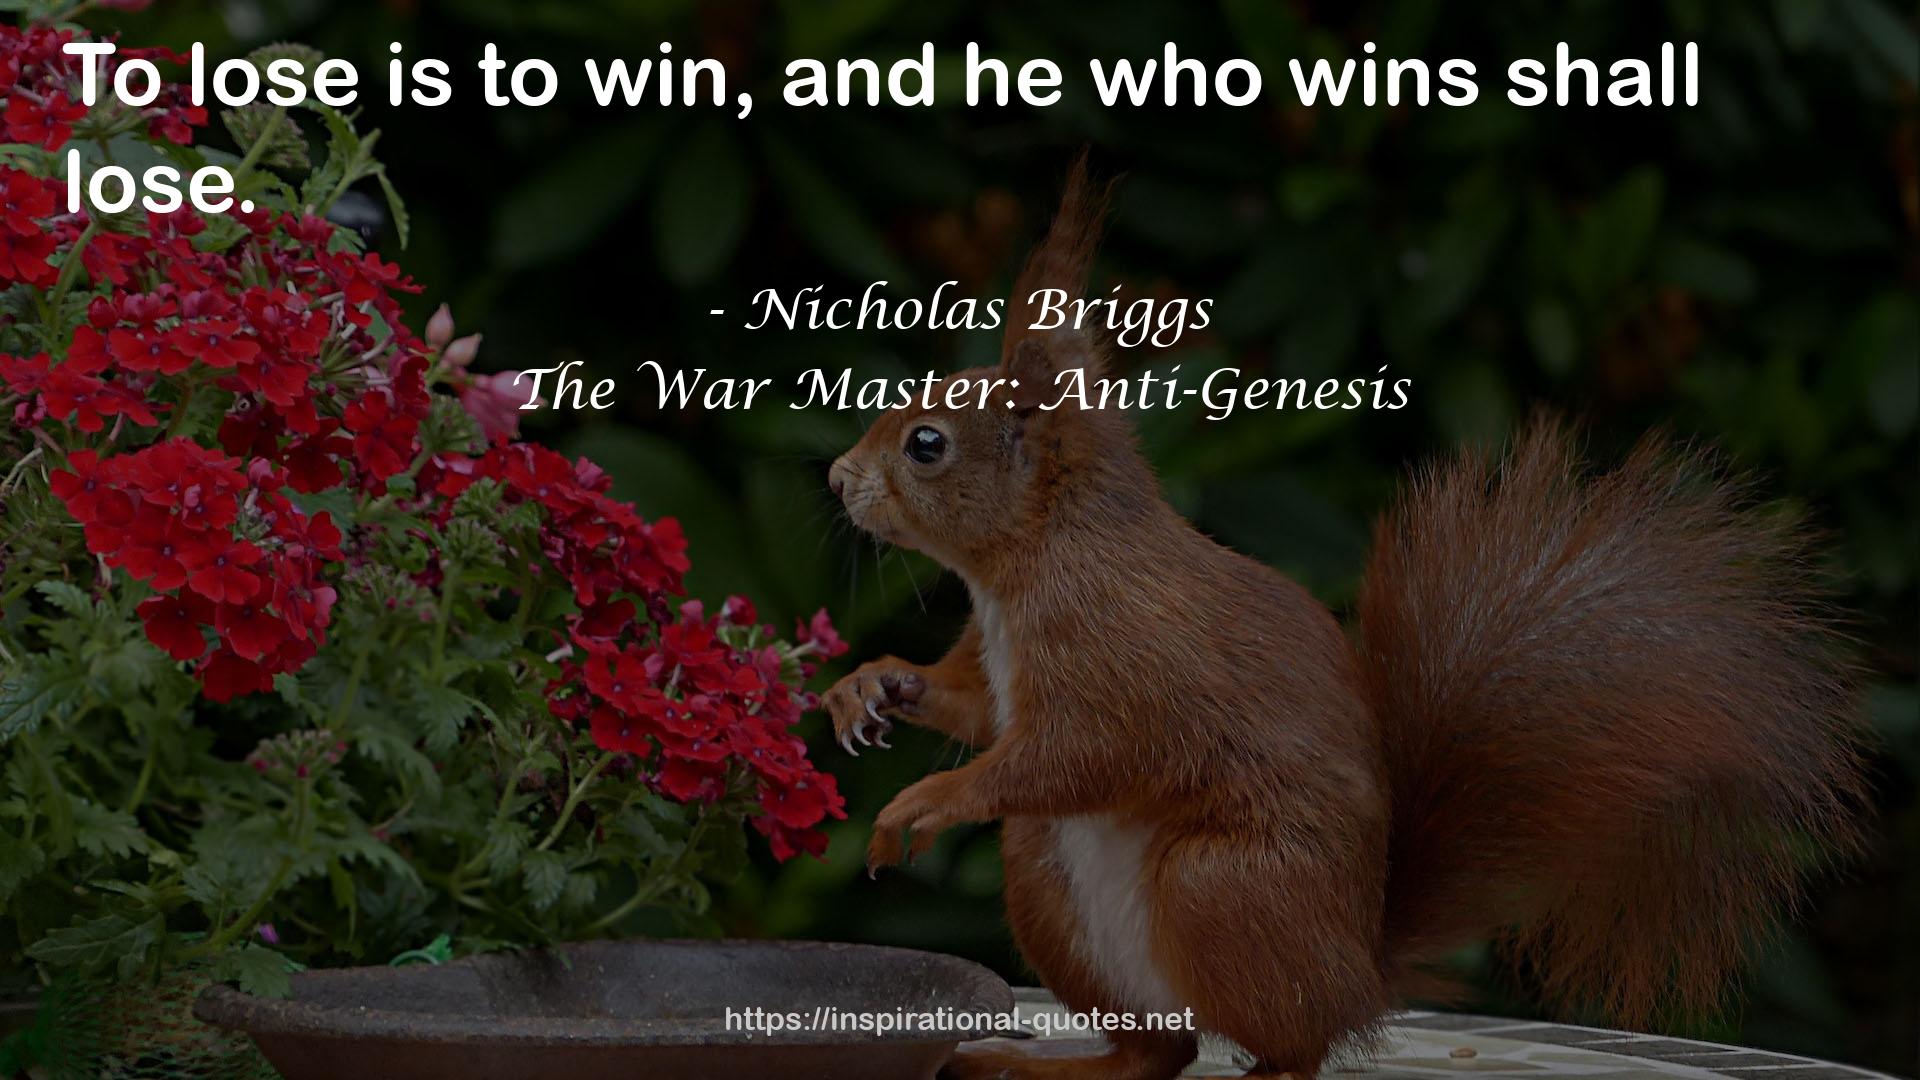 The War Master: Anti-Genesis QUOTES